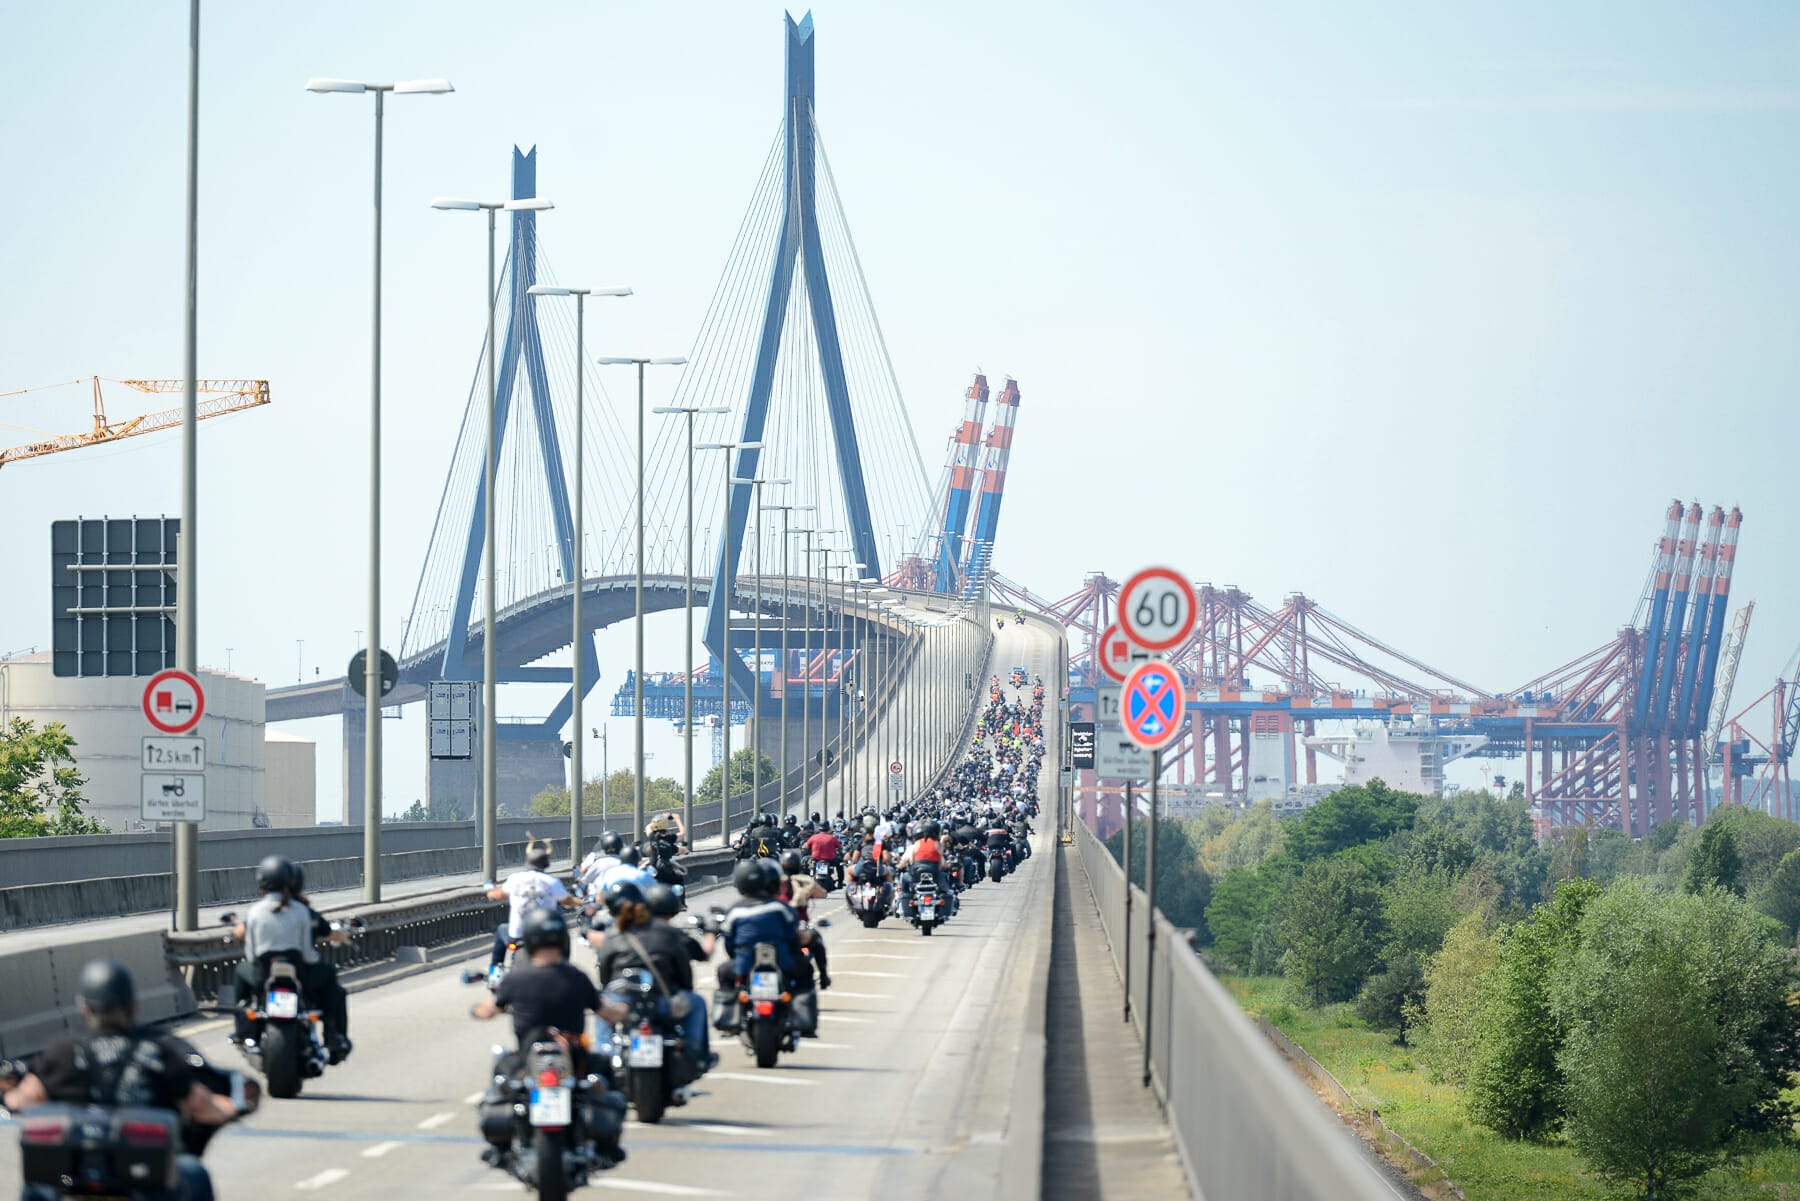 Hamburg Harley Days 2021 postponed
- also in the MOTORCYCLES.NEWS APP